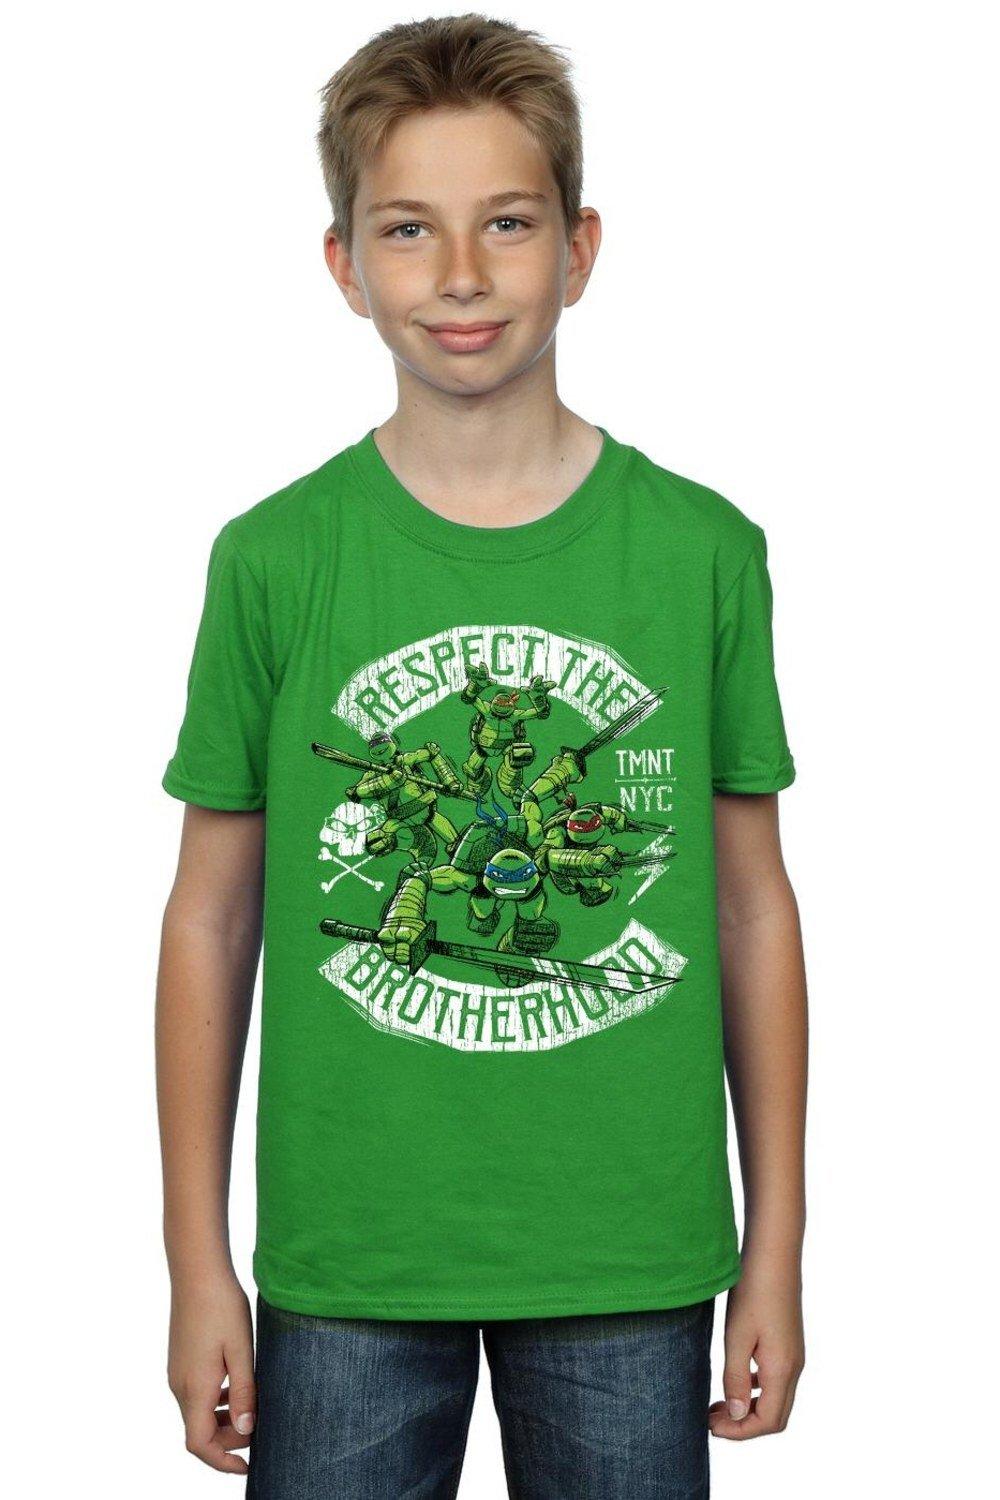 Respect The Brotherhood T-Shirt